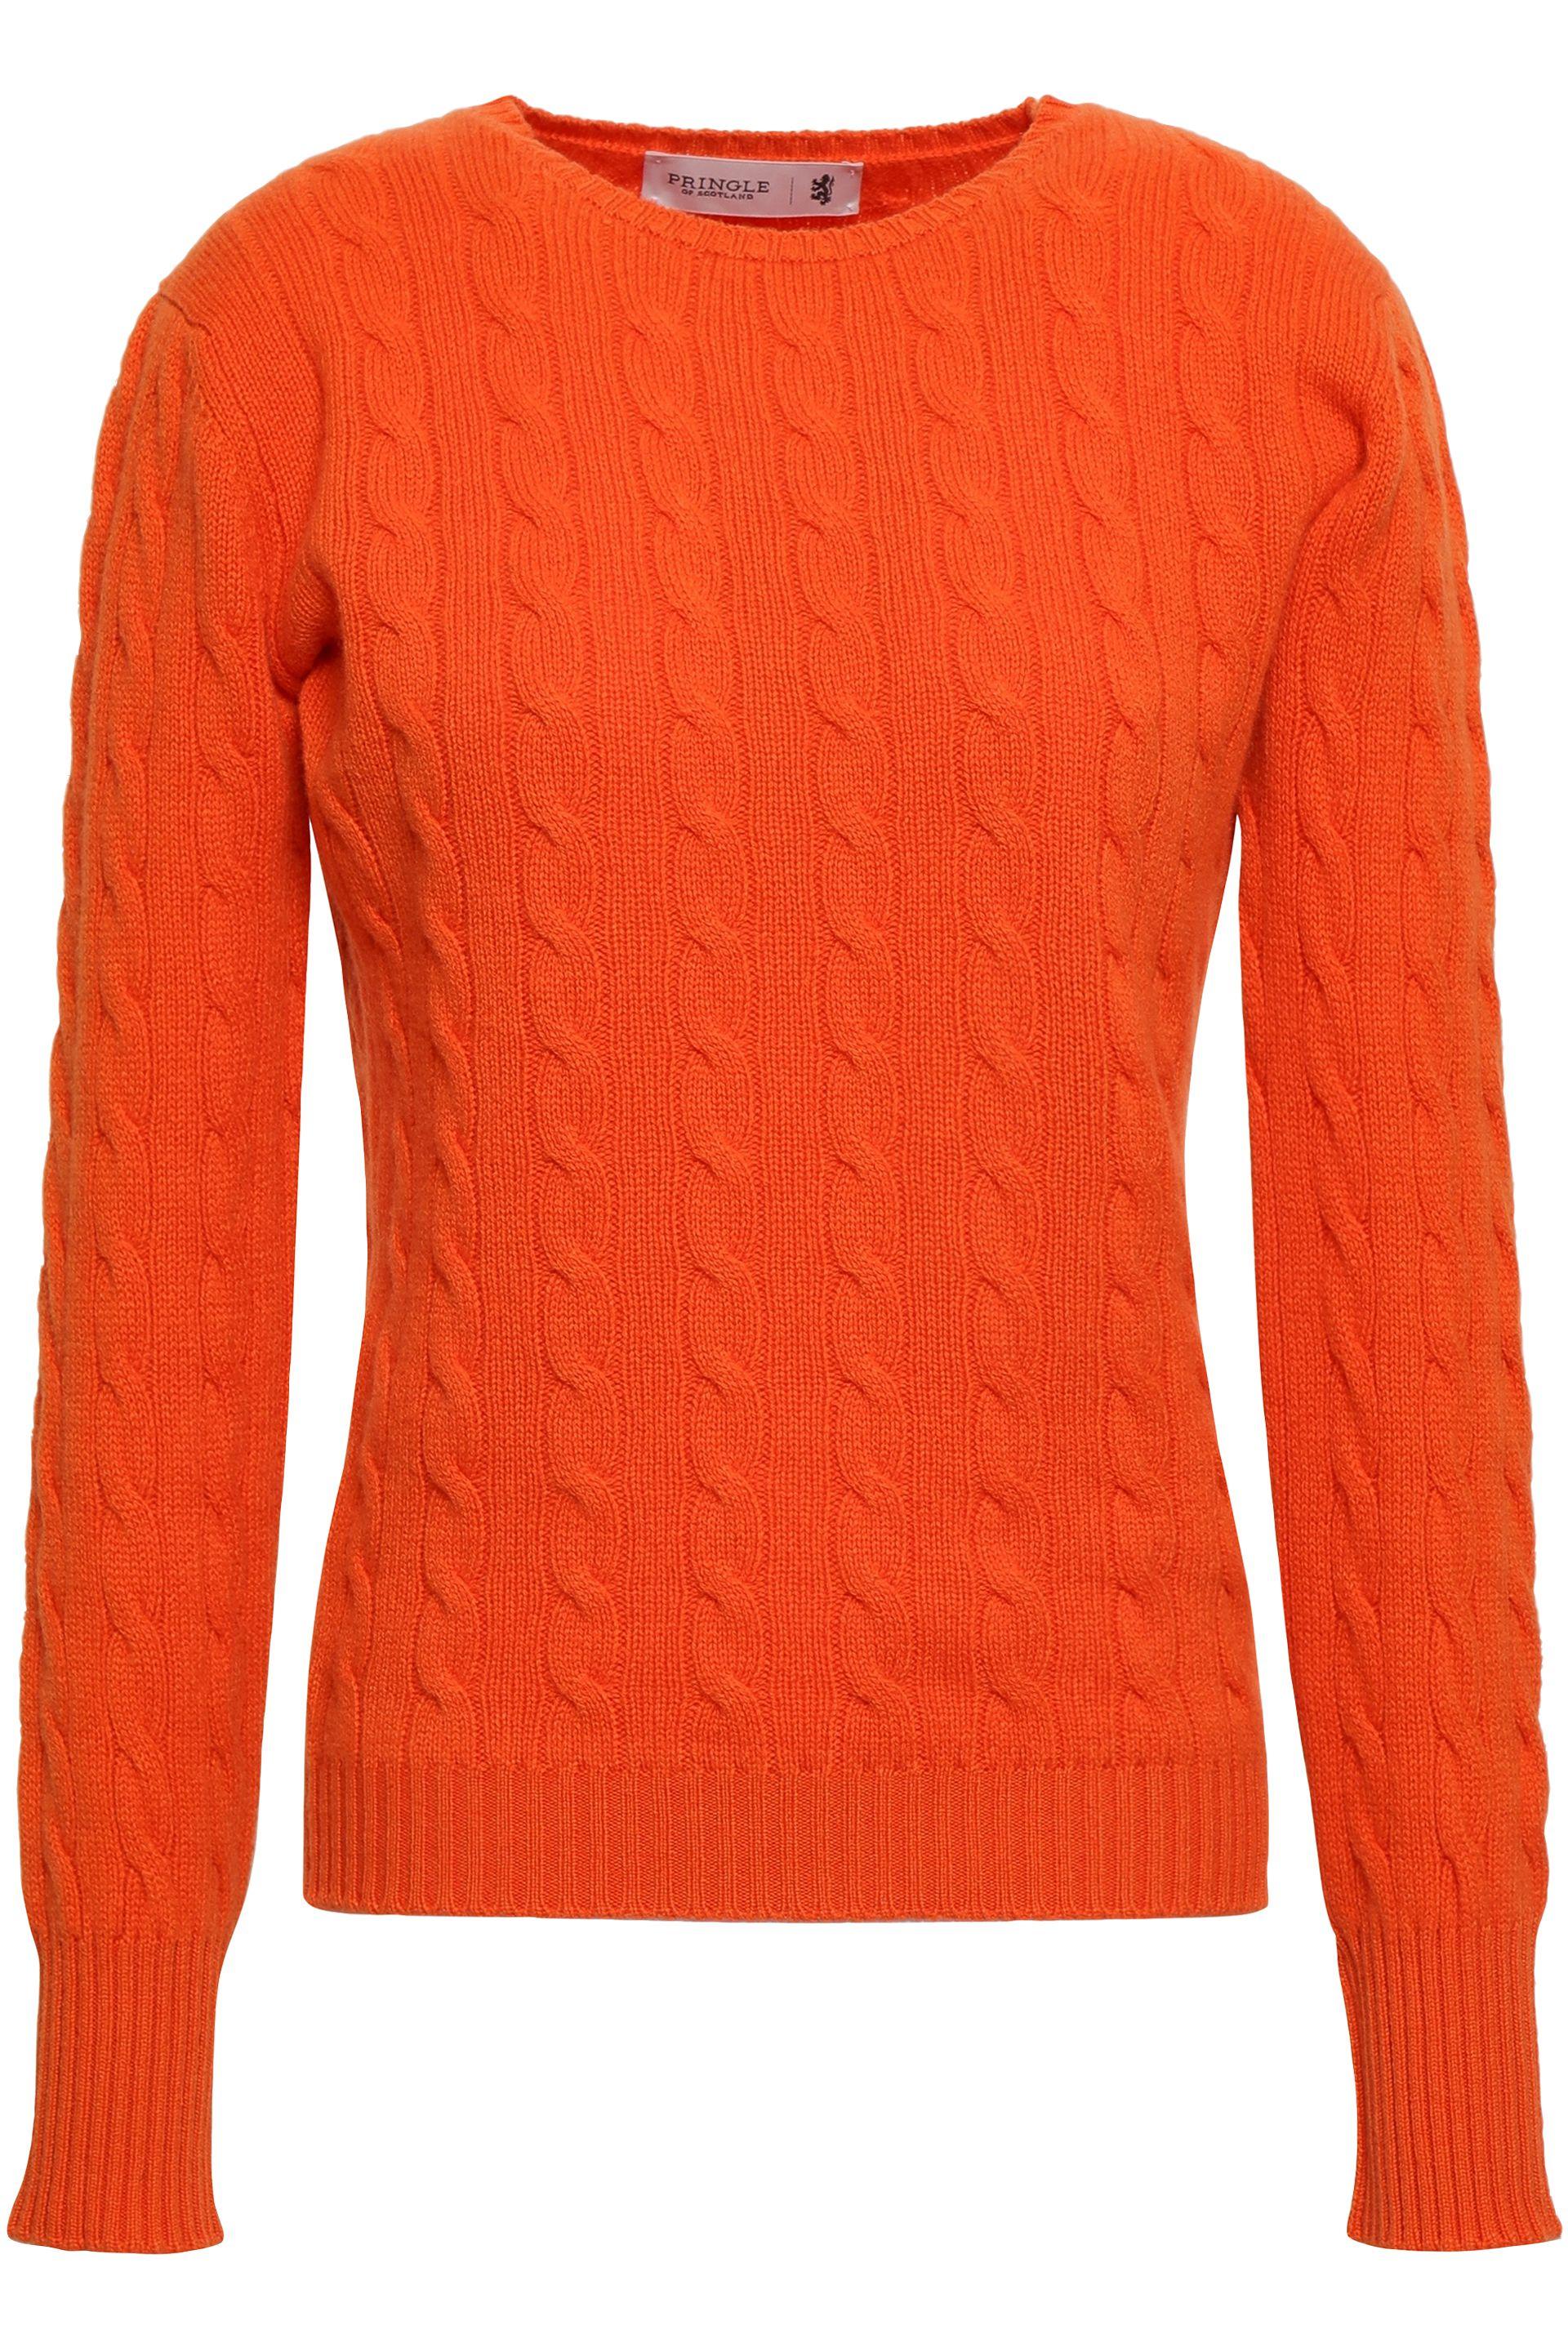 Pringle of Scotland Cable-knit Cashmere Sweater Orange - Lyst